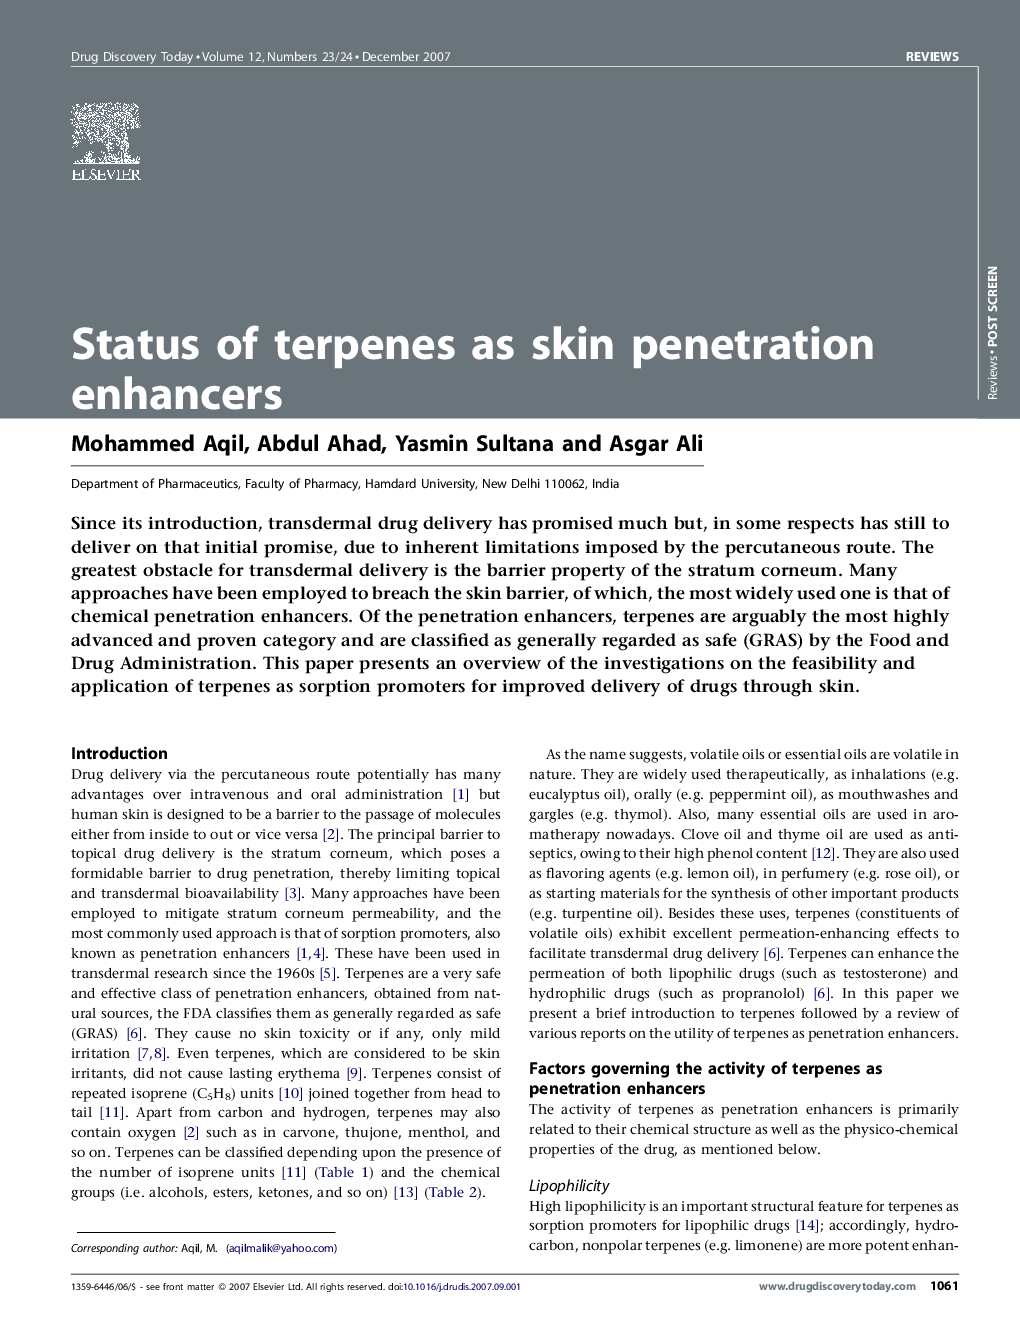 Status of terpenes as skin penetration enhancers